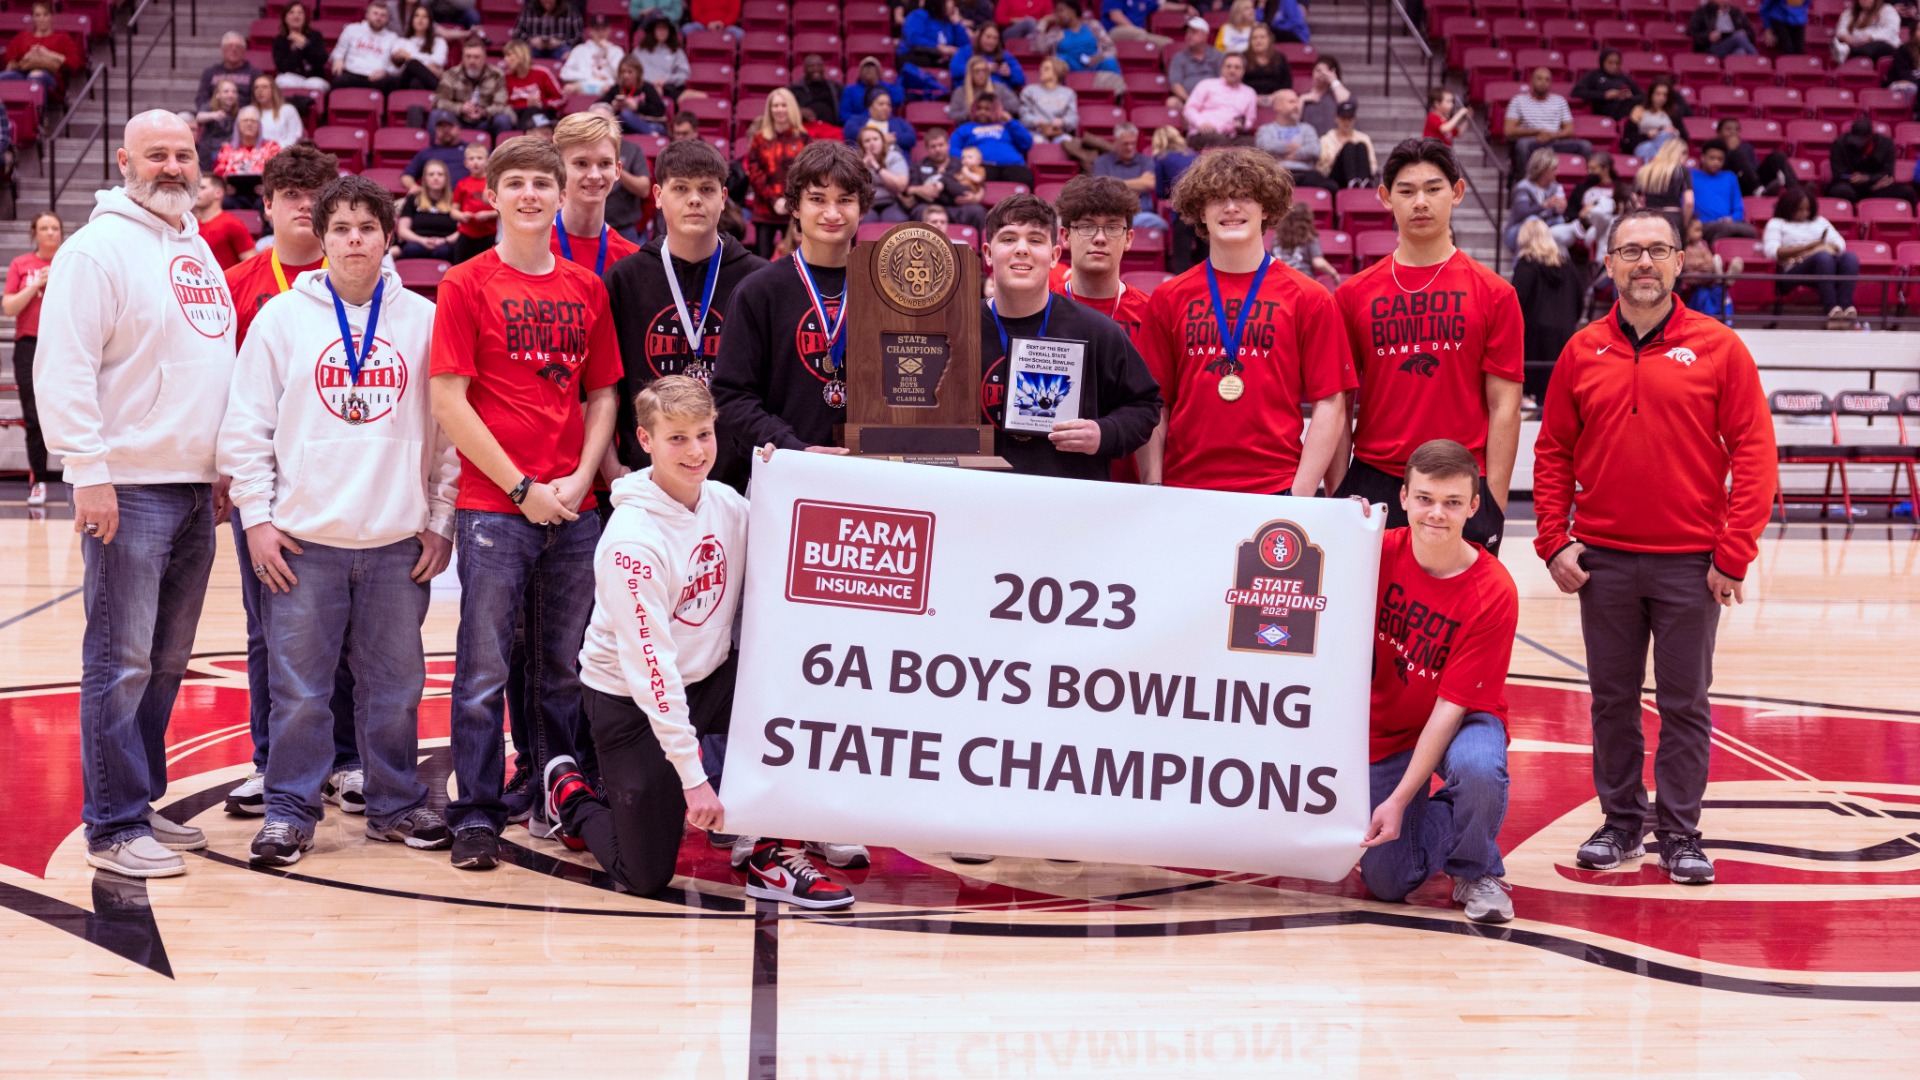 CabotSlide 2 - 2023 6A Boys Bowling State Champions